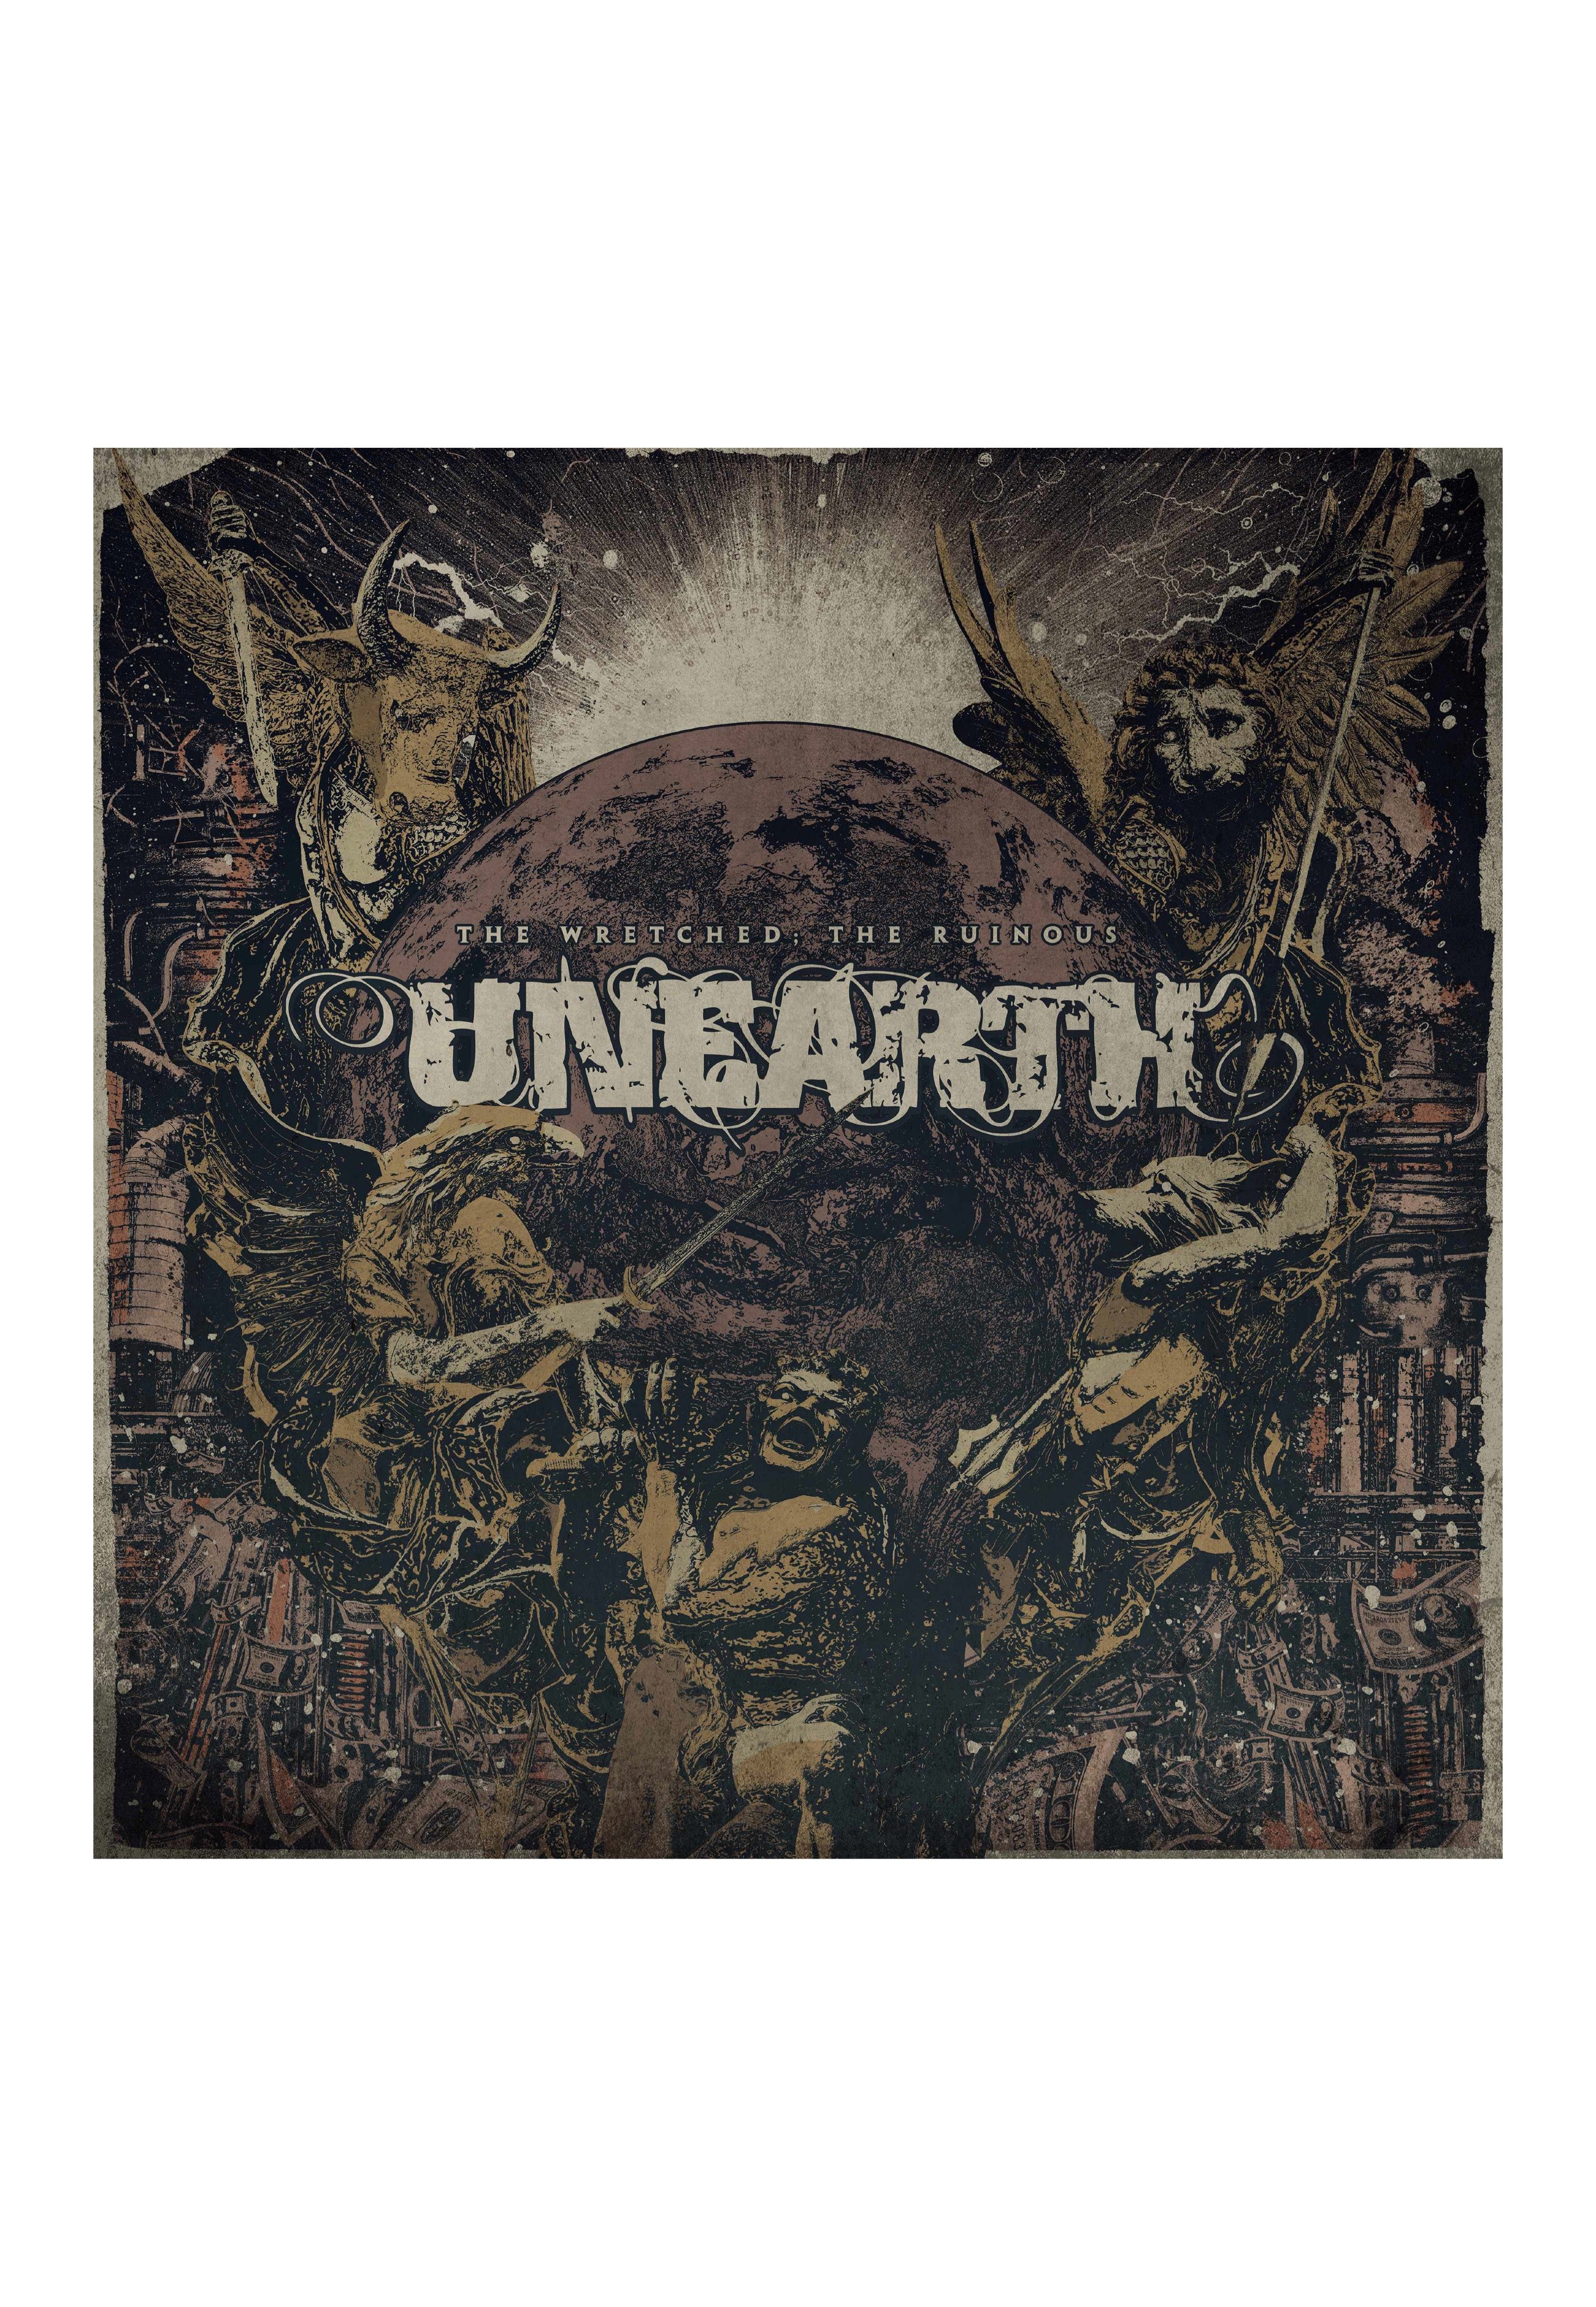 Unearth - The Wretched; The Ruinous Ltd. - Digipak CD